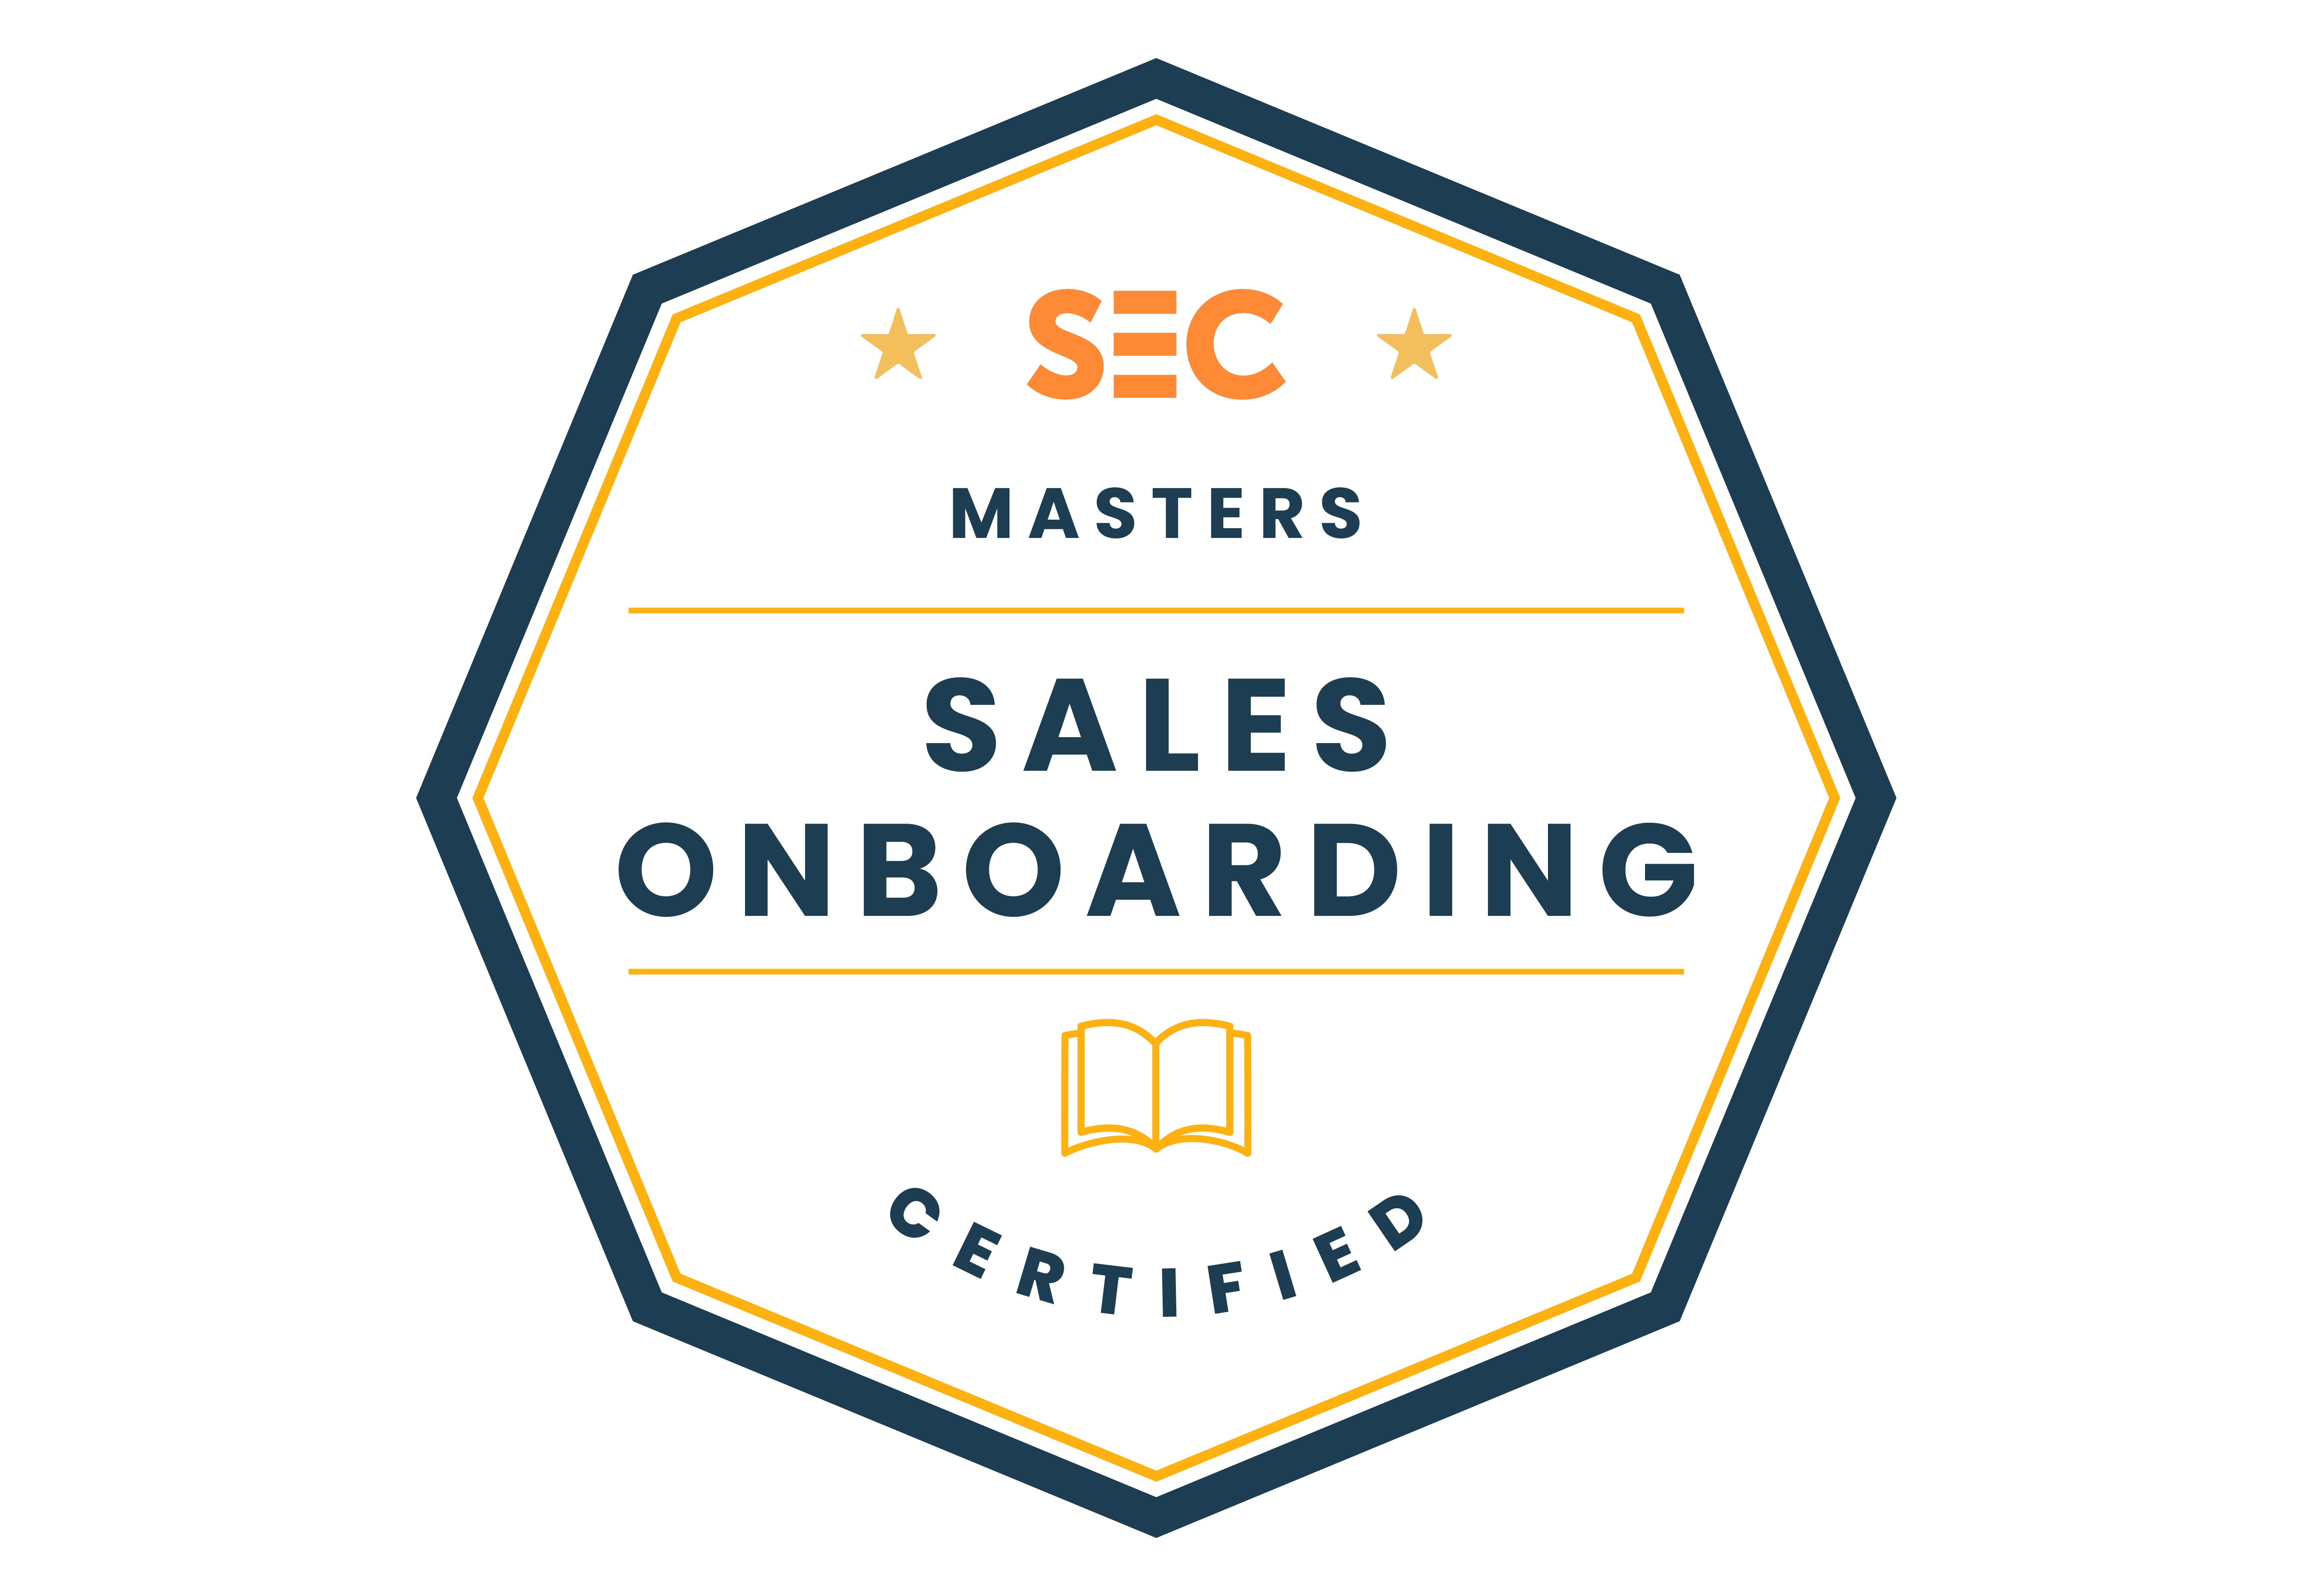 Sales Onboarding Certified | Masters badge